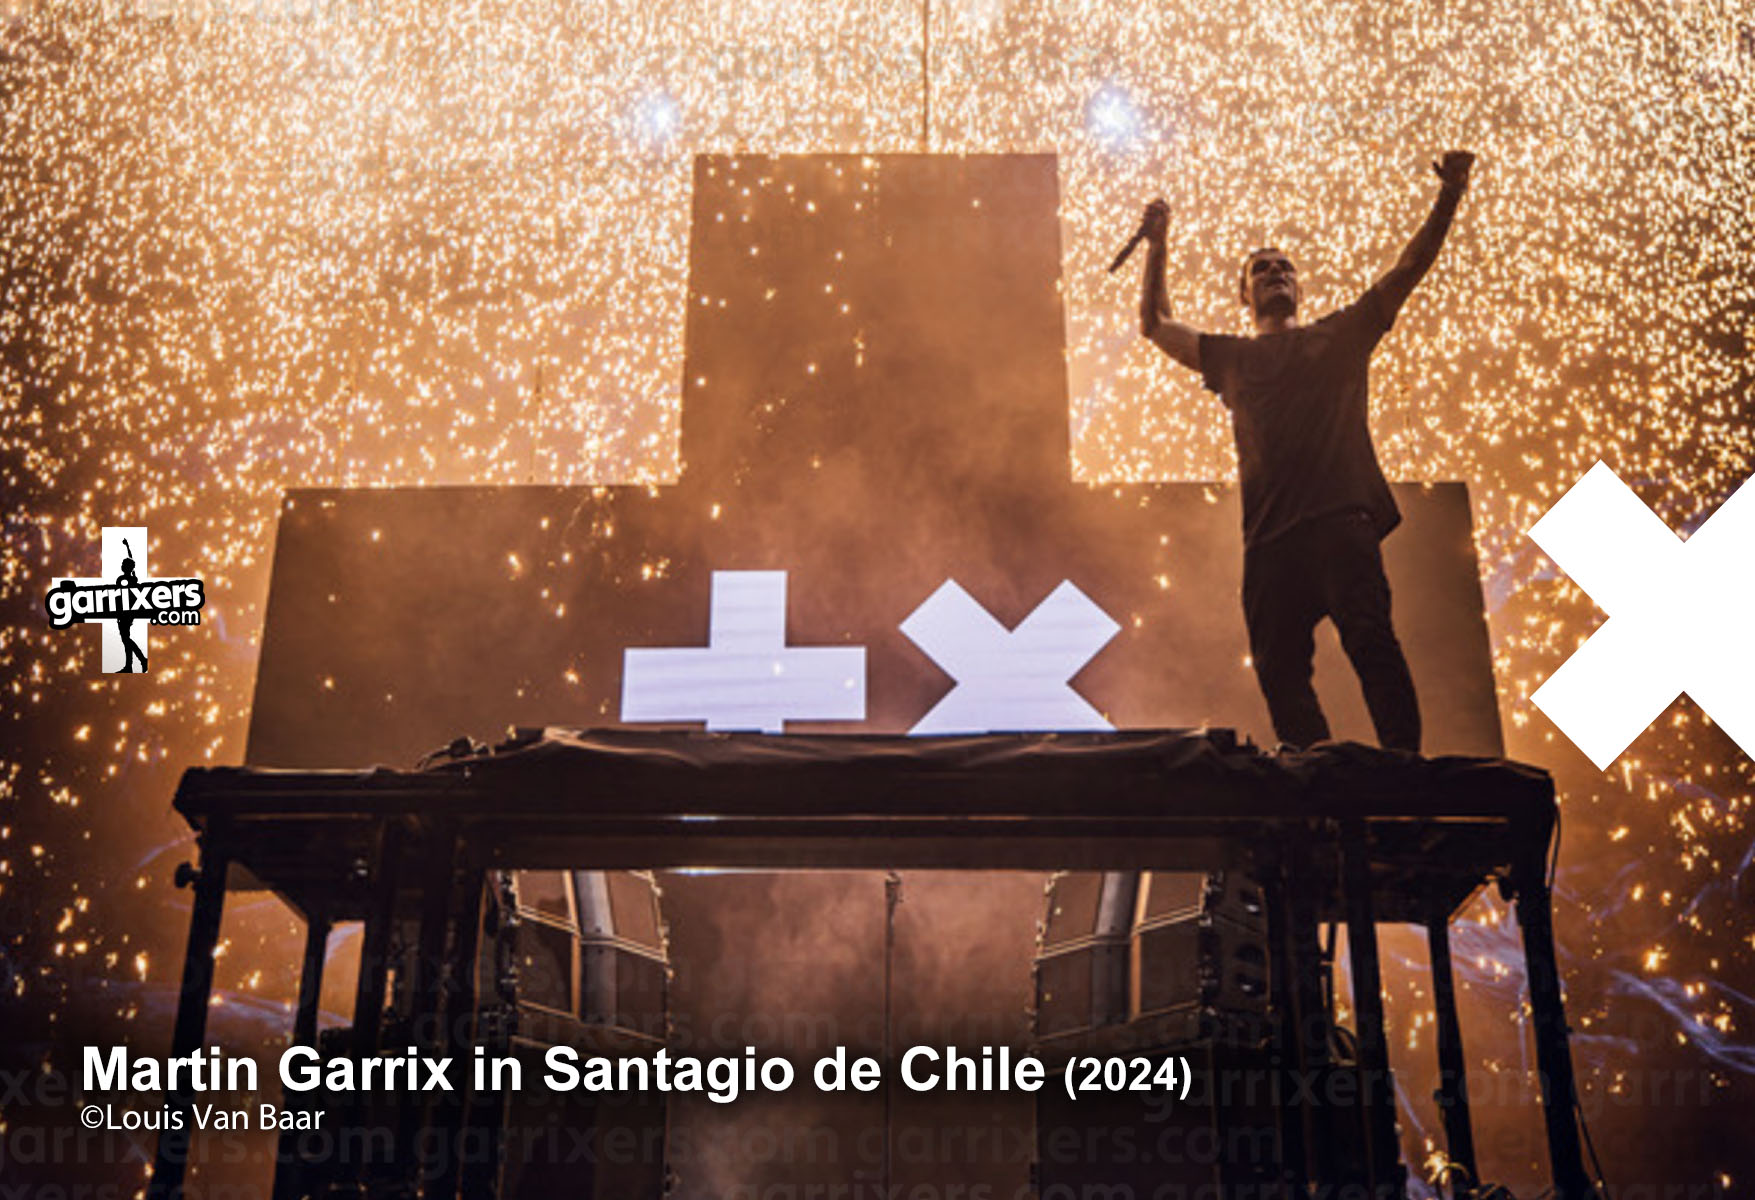 Martin Garrix in Santiago de Chile, March 2024 on garrixers.com